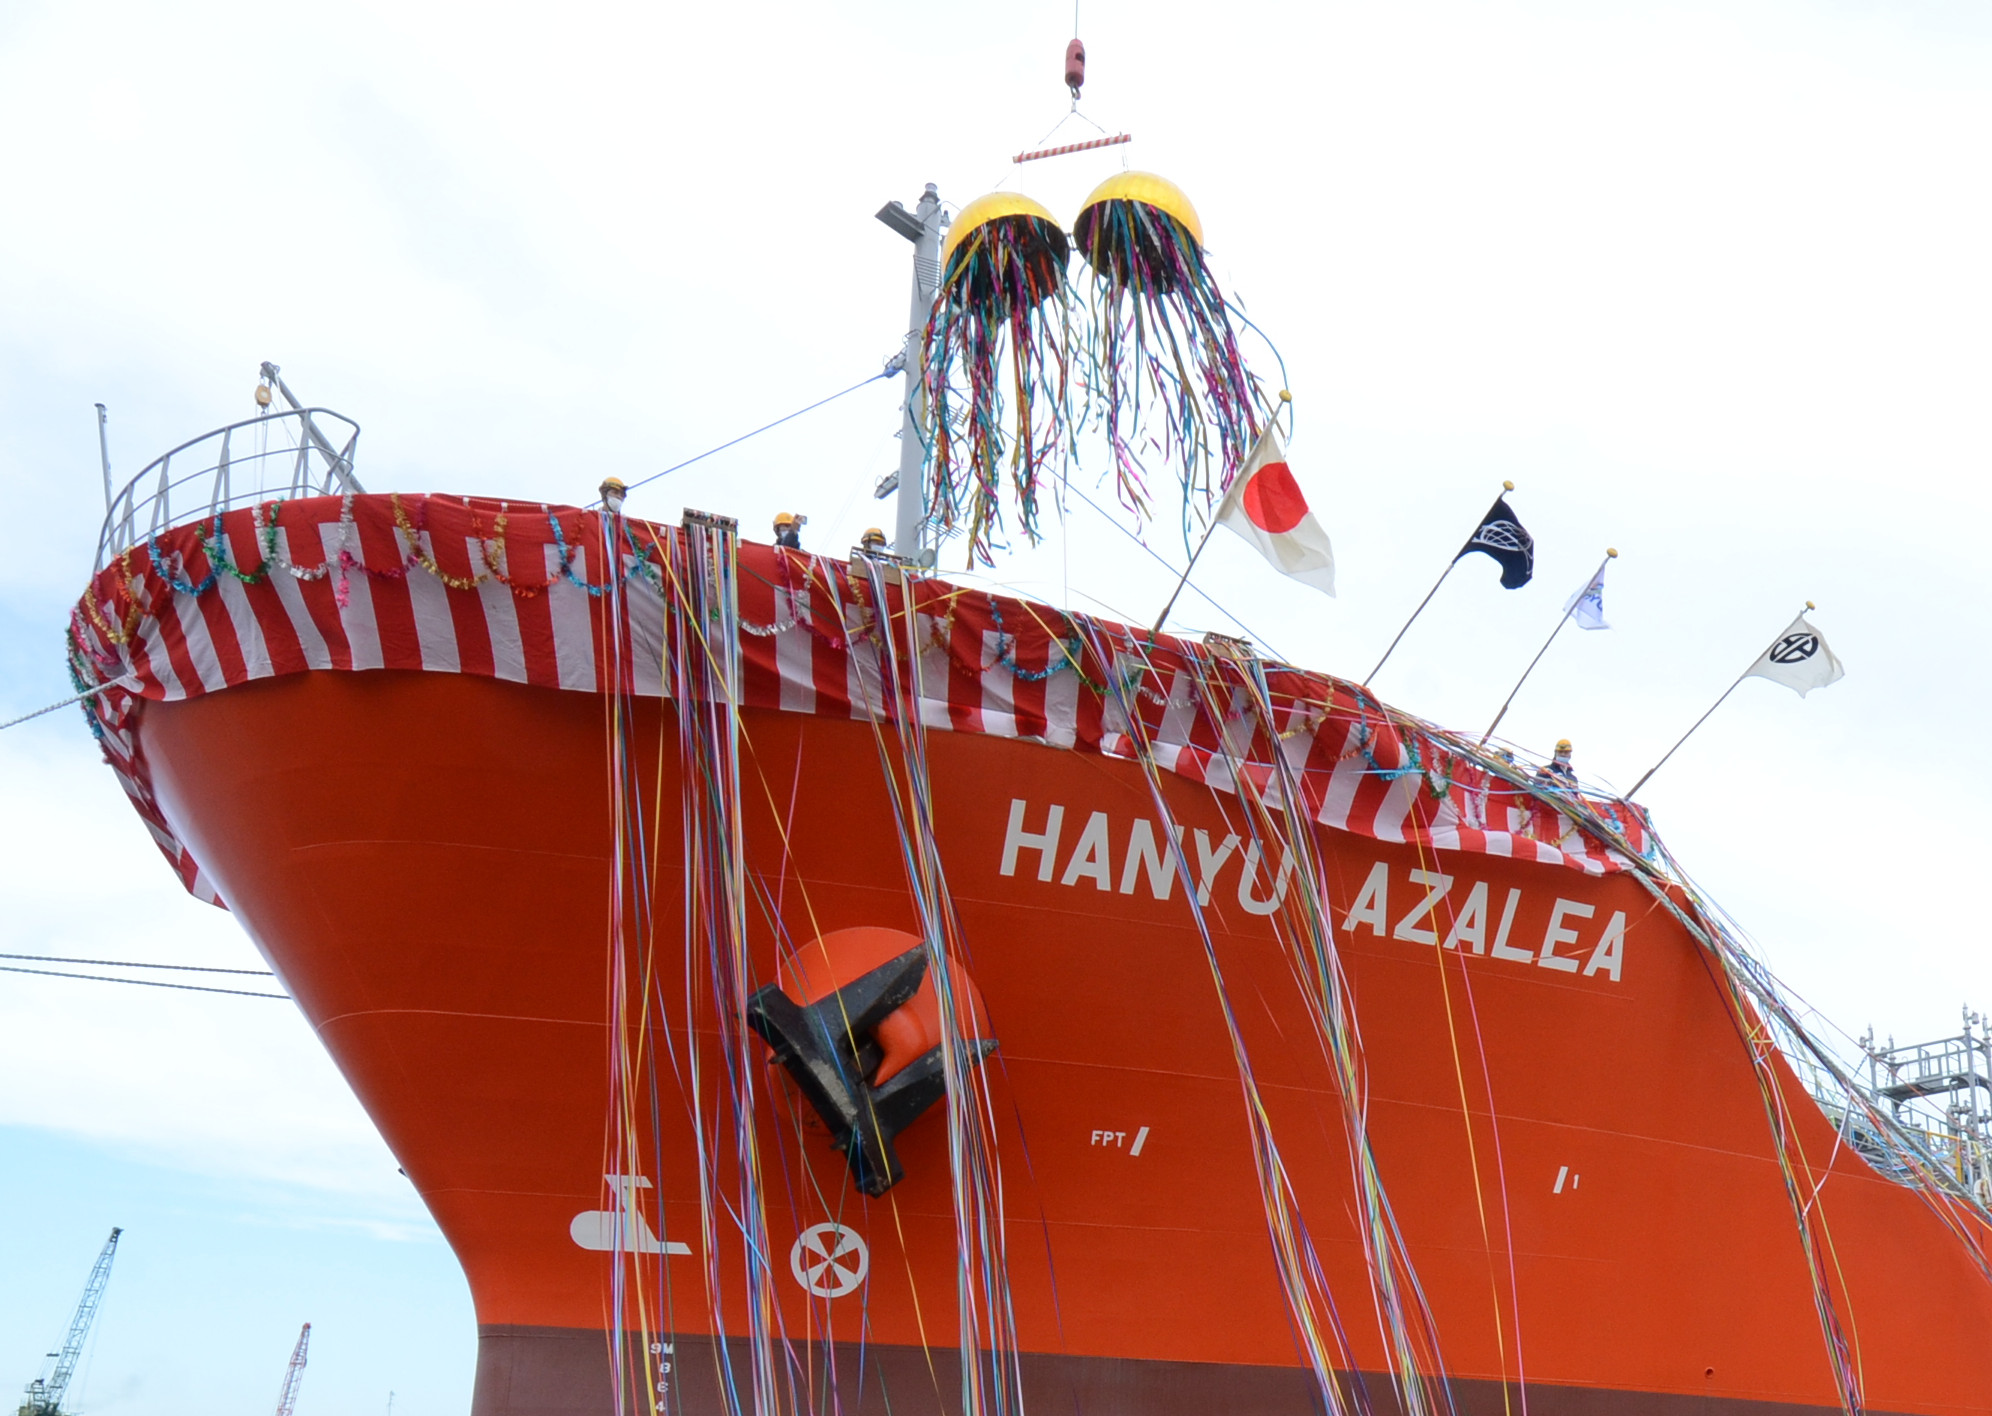 Sno.682 12,500DWT ステンレスケミカルタンカー 「HANYU AZALEA」 号の命名引渡式を執り行いました 北日本造船株式会社